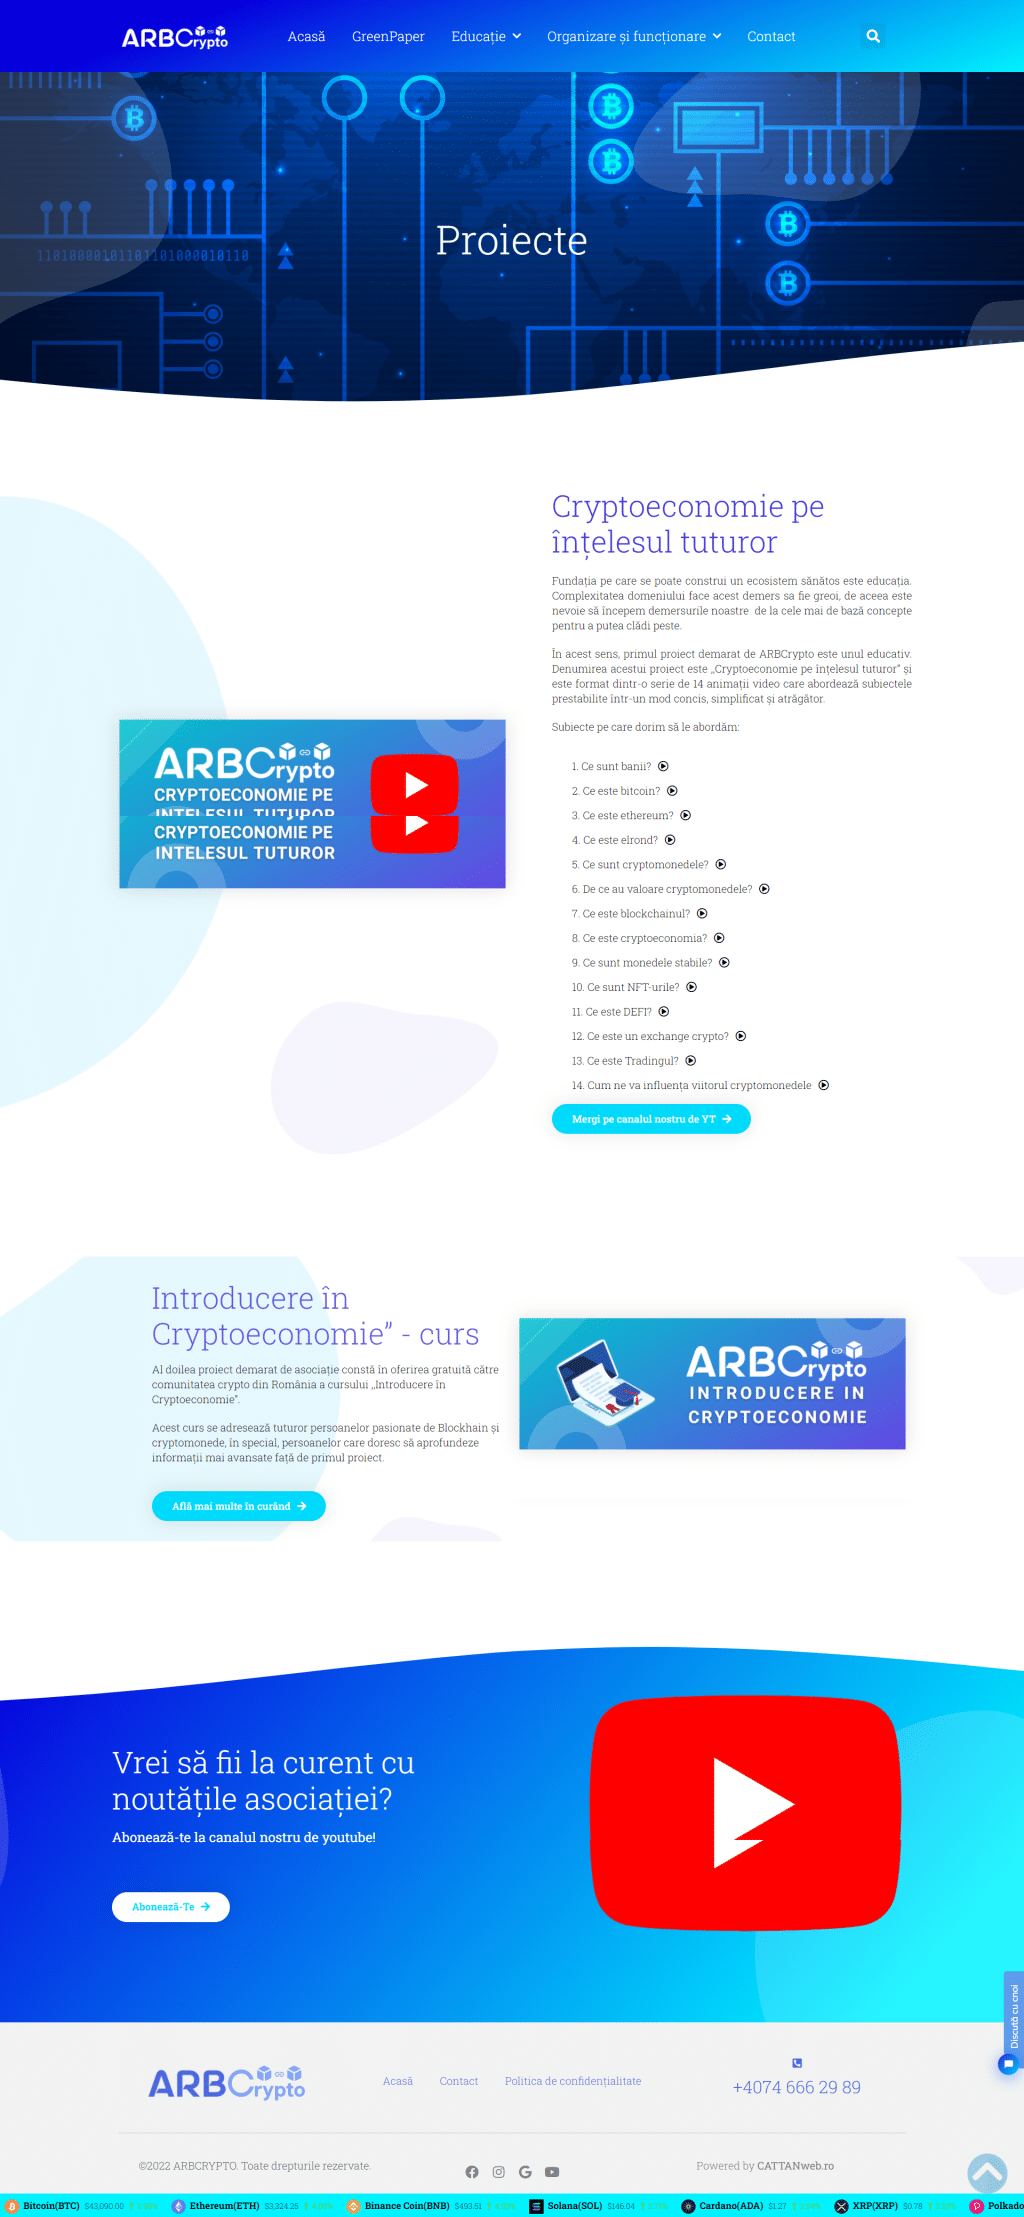 ARBCrypto.ro project